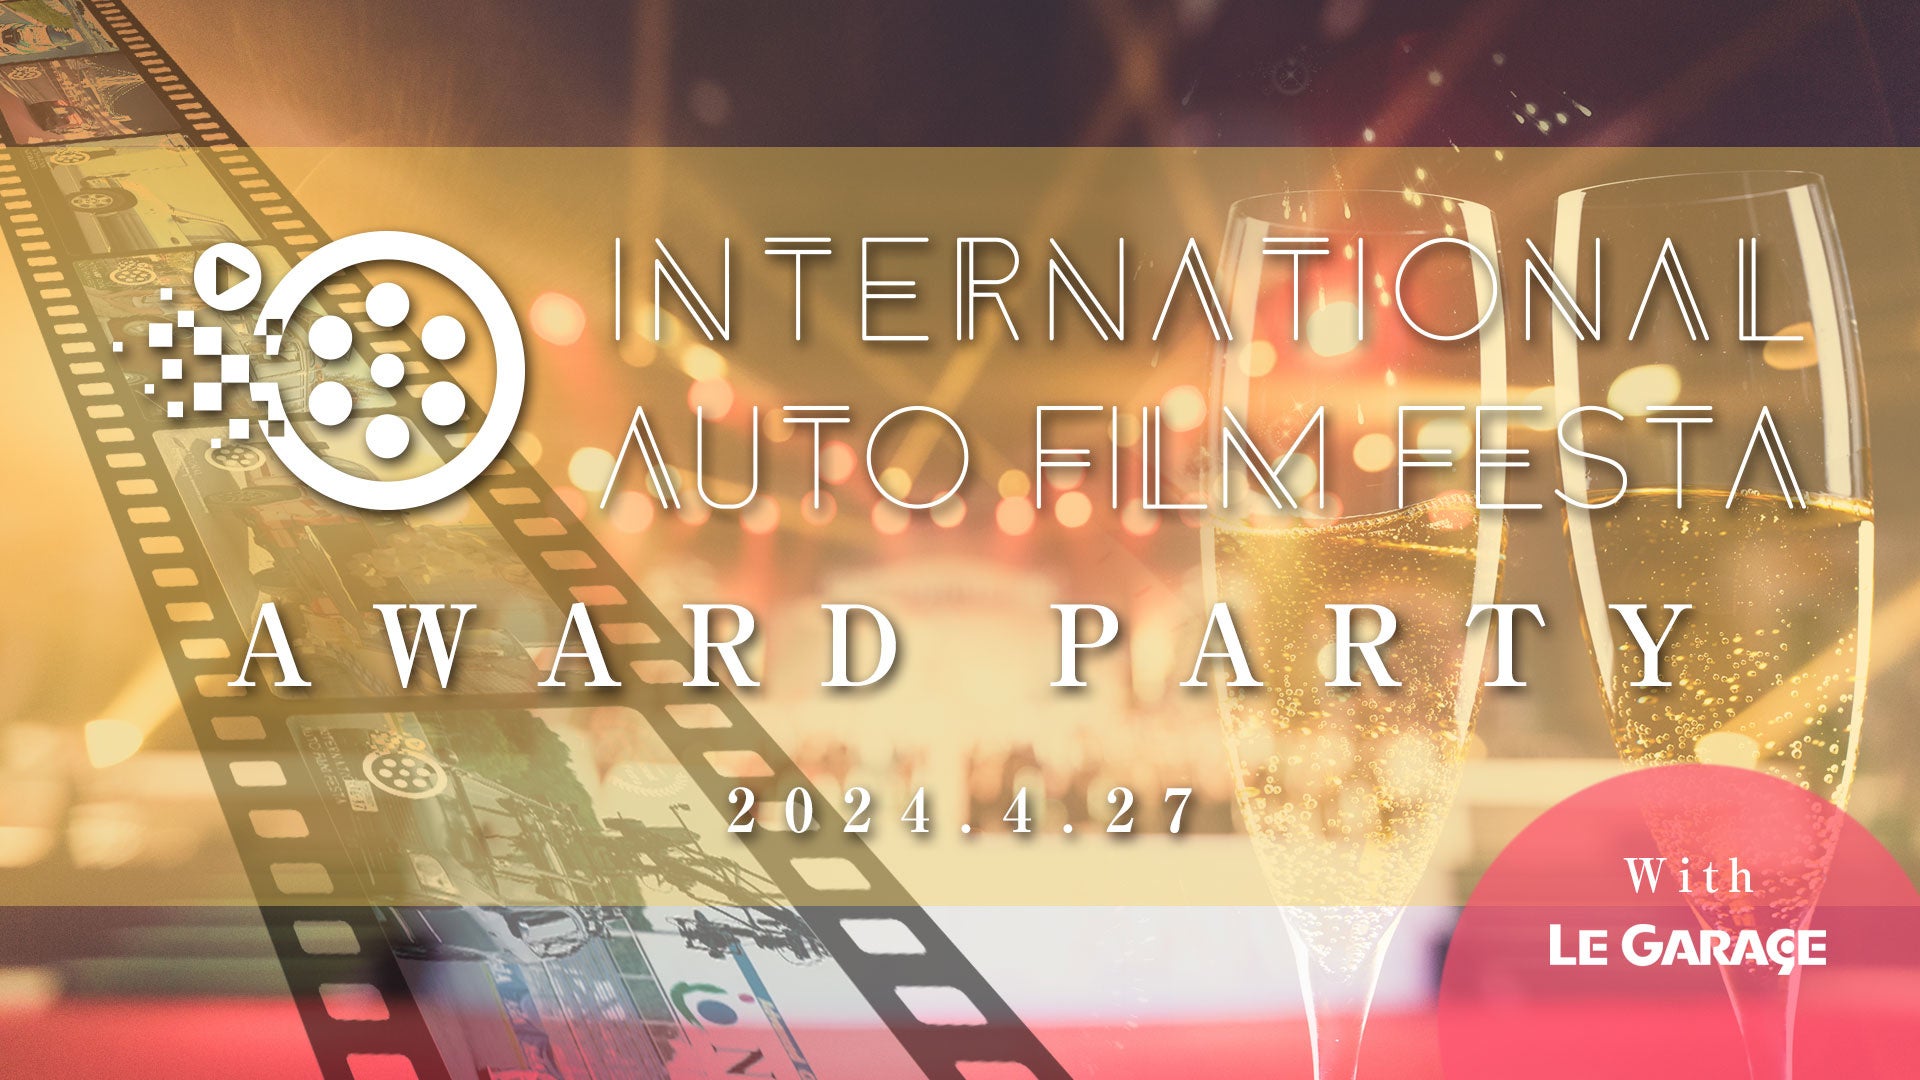 yAward PartyJÌzi̒ؓBQAێԉfՁuInternational Auto Film Festav